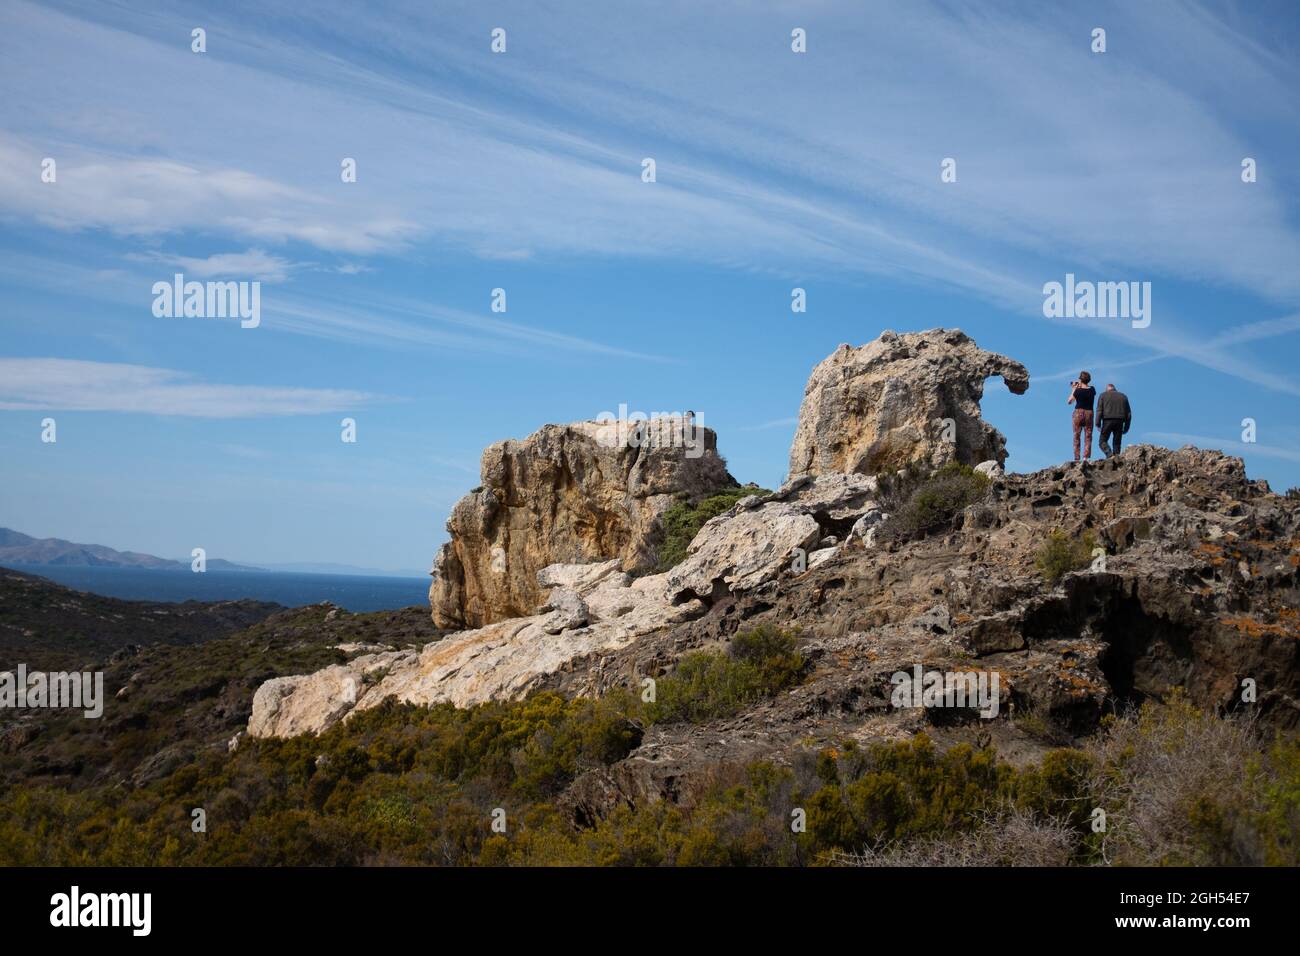 People walk on rock formations at the Cap de Creus, Cadaqués, Costa Brava, Catalonia, Spain Stock Photo